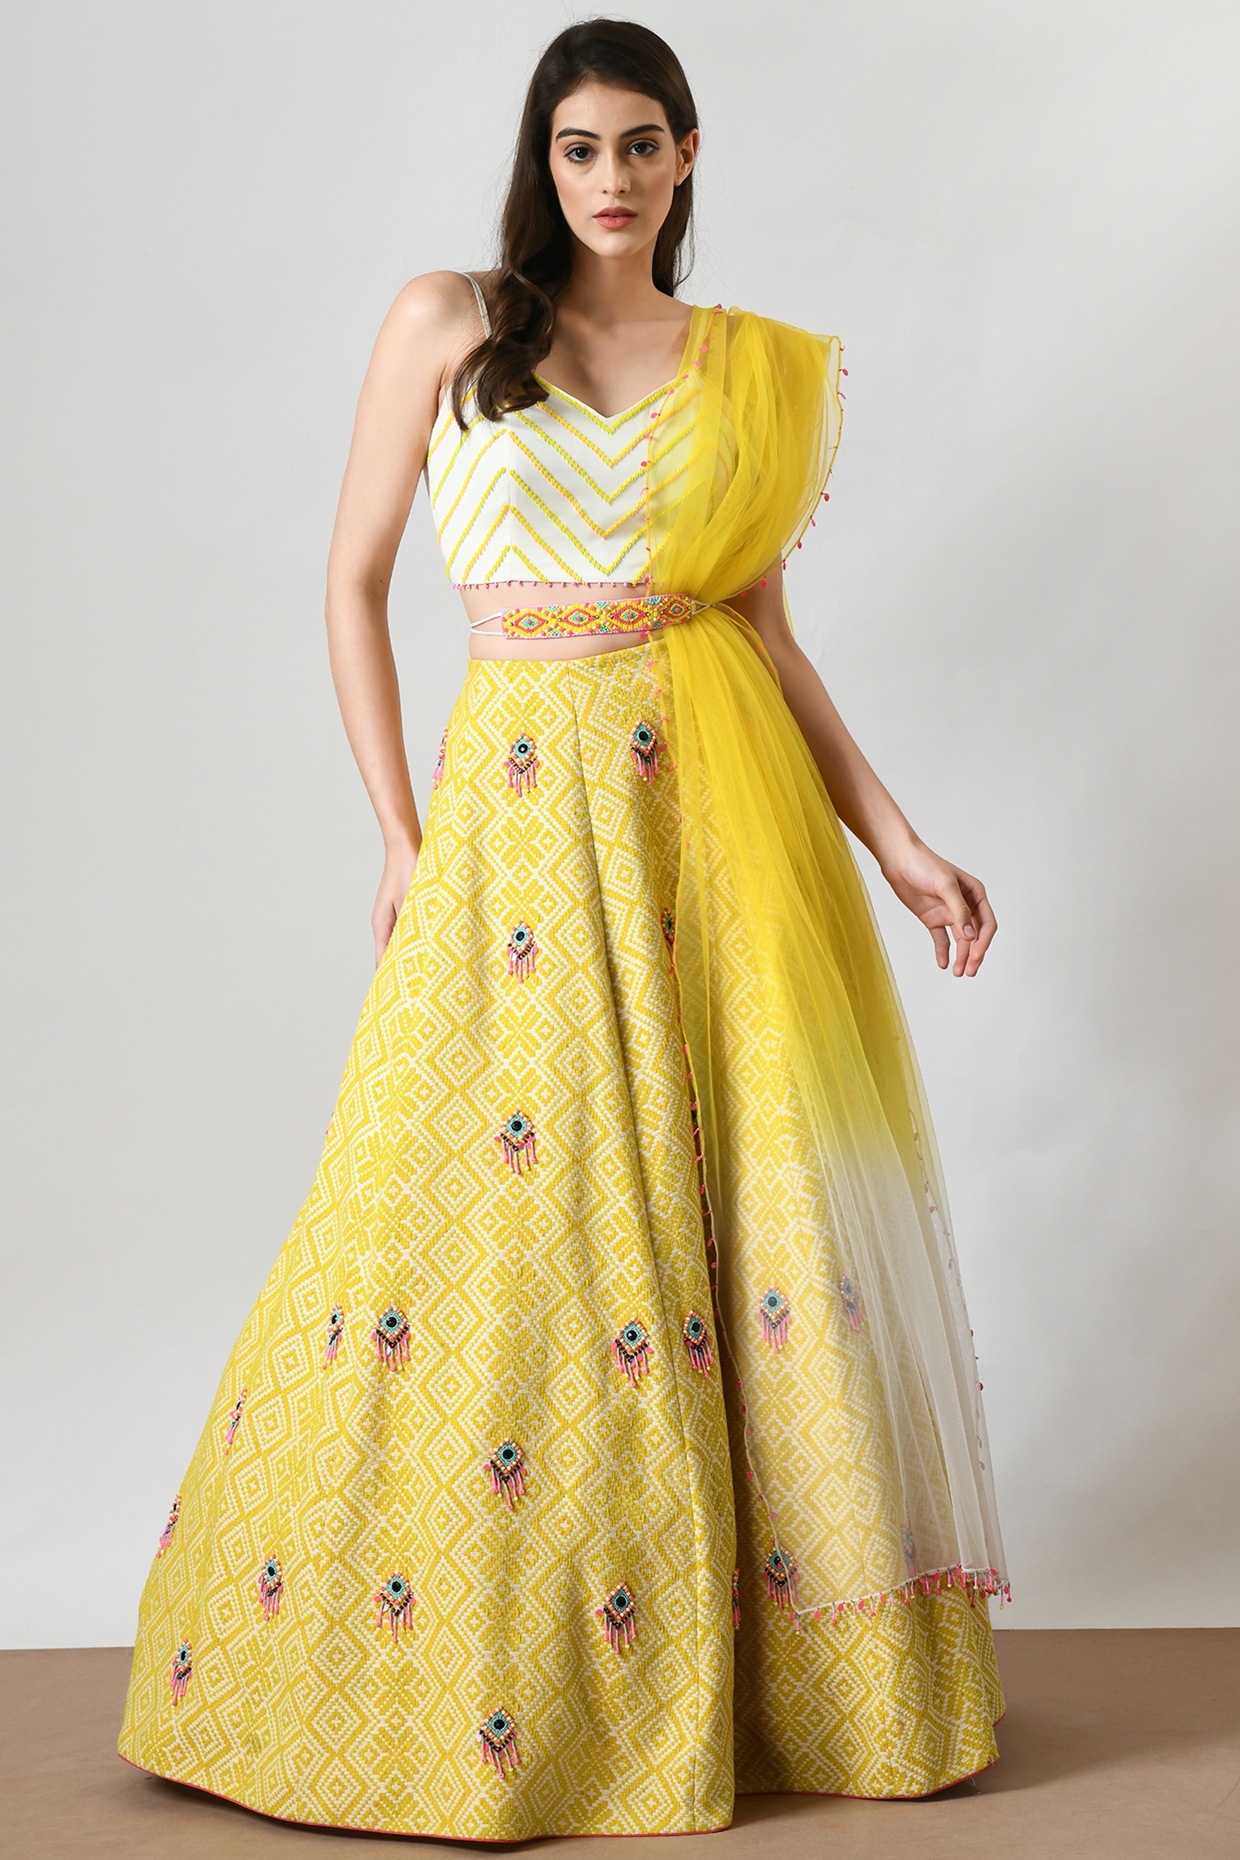 Sunset Yellow Lehenga Choli With Floral And Leaf Cut Mirror Work | Lehnga  dress, Indian fashion dresses, Dress indian style